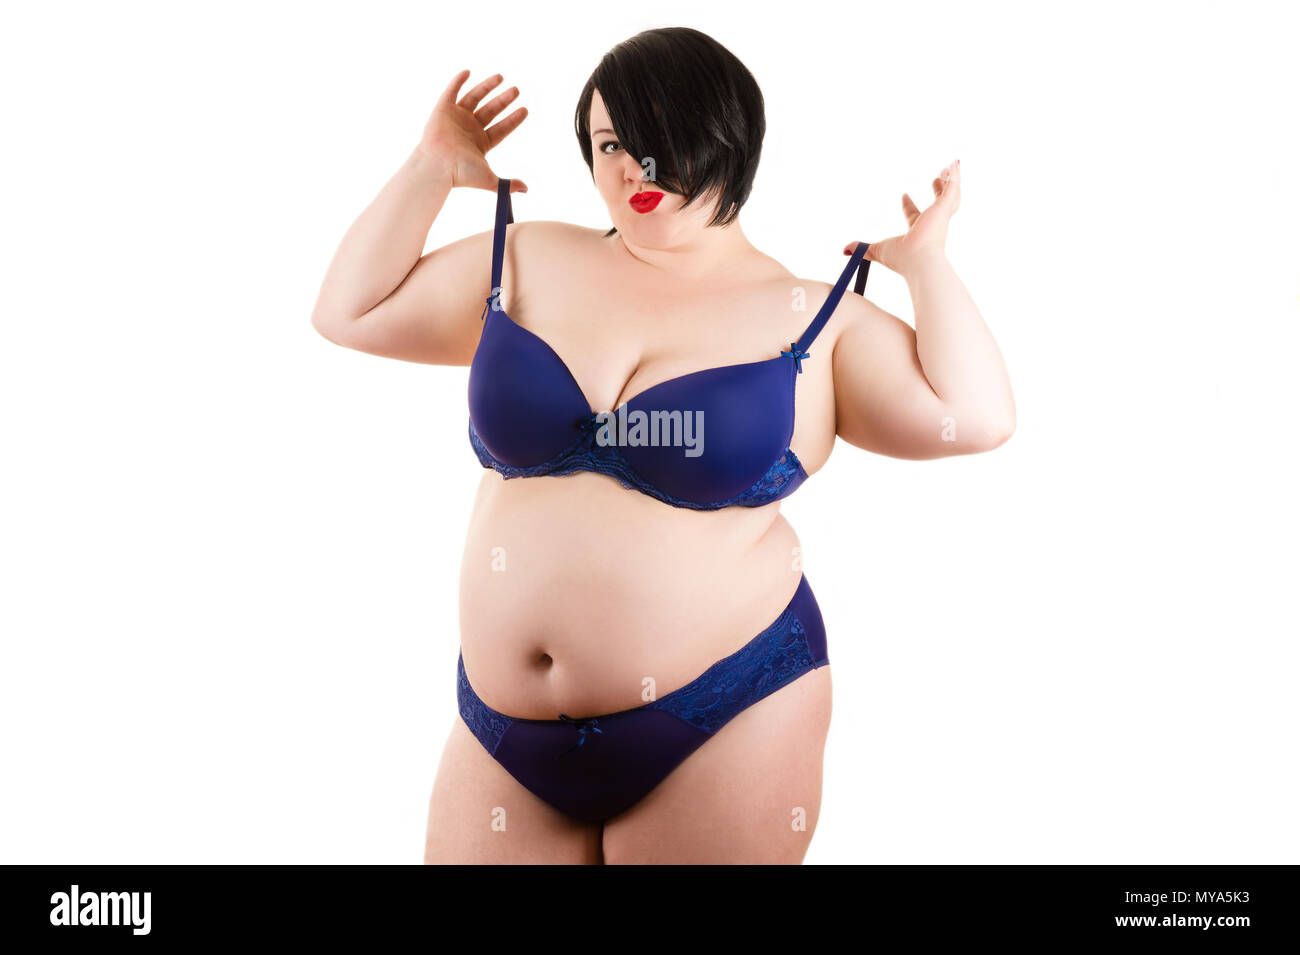 https://c8.alamy.com/comp/MYA5K3/charming-fat-woman-with-big-breasts-in-lingerie-MYA5K3.jpg